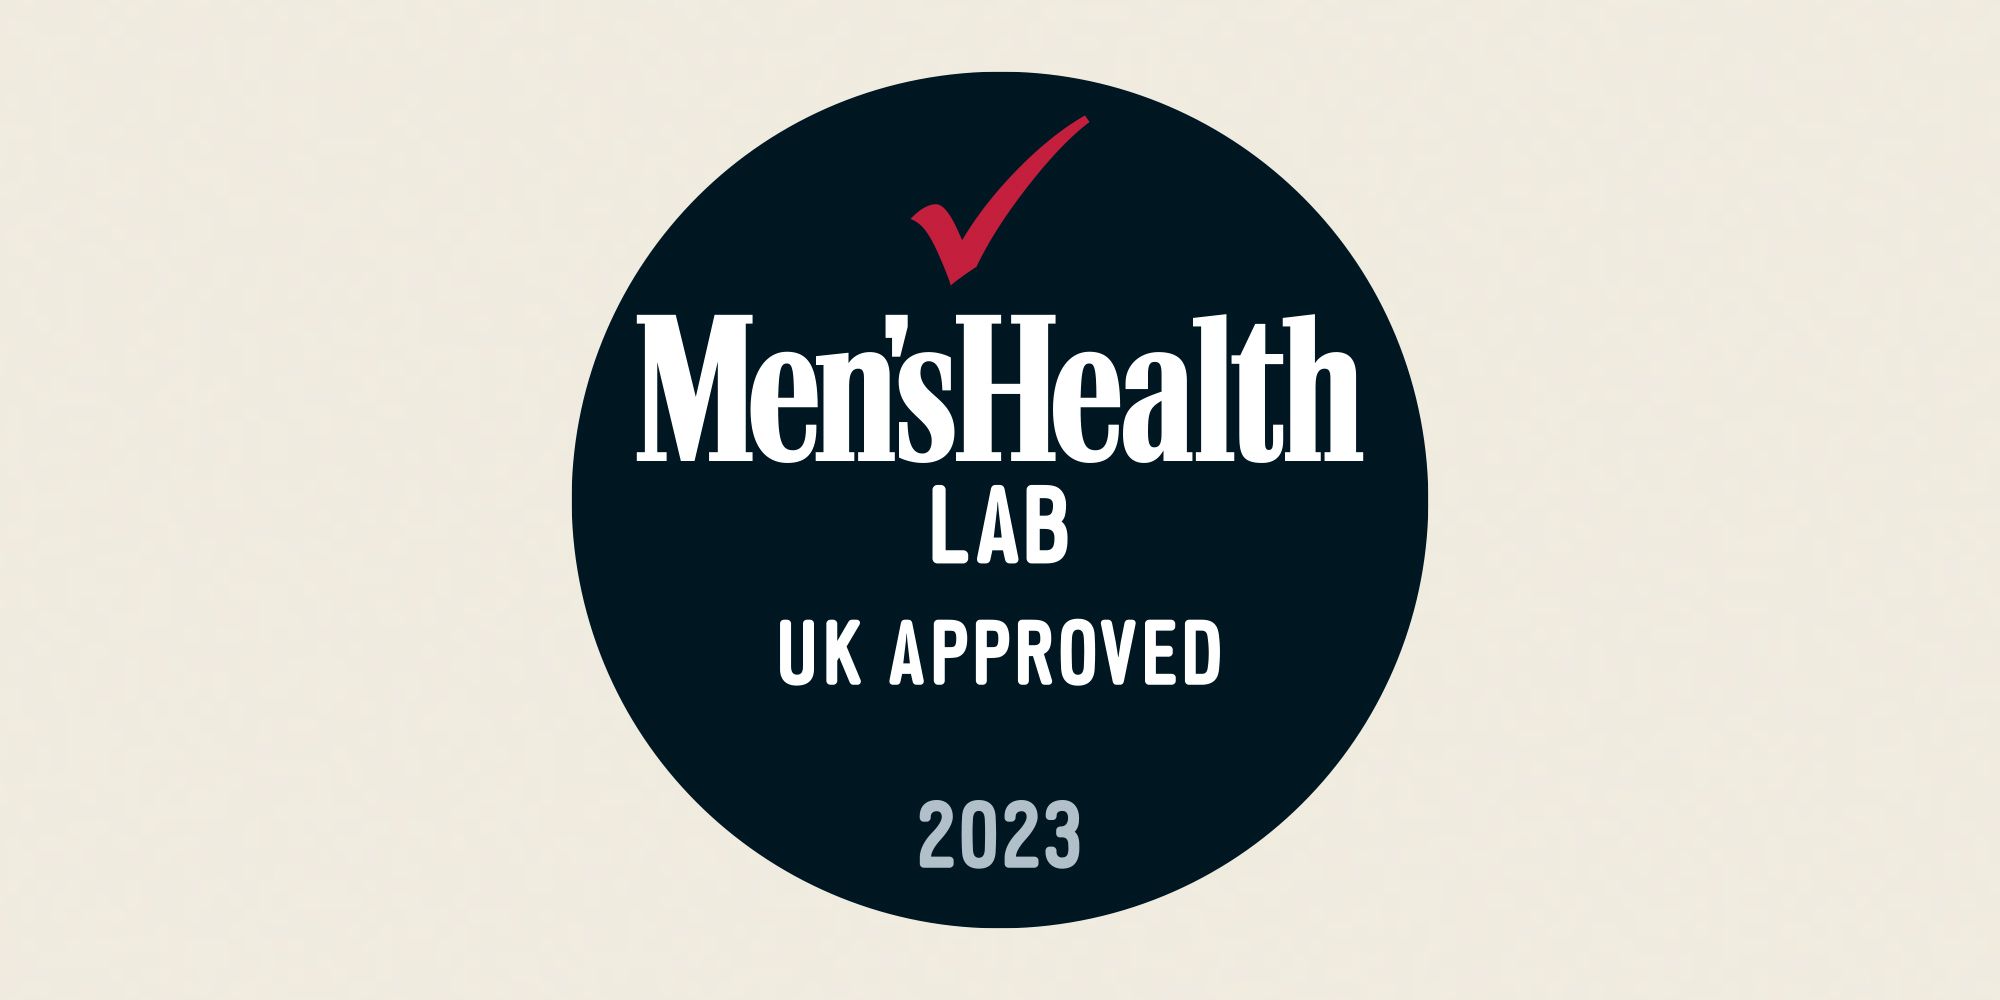 Men's Health Lab Explained - FAQs